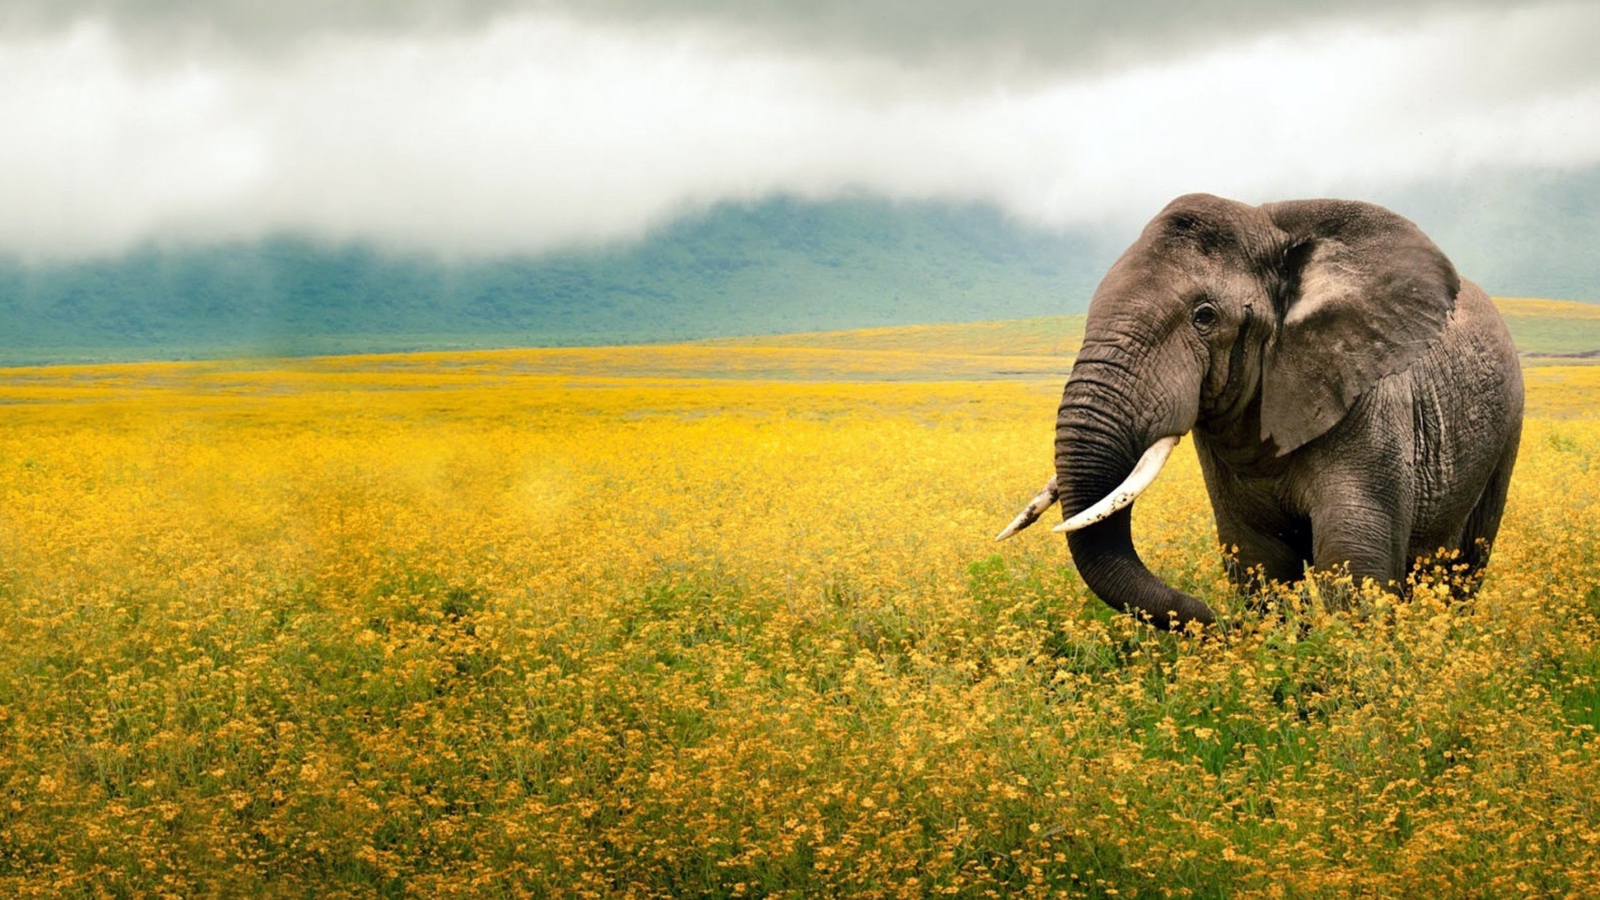 Обои Wild Elephant On Yellow Field In Tanzania 1600x900